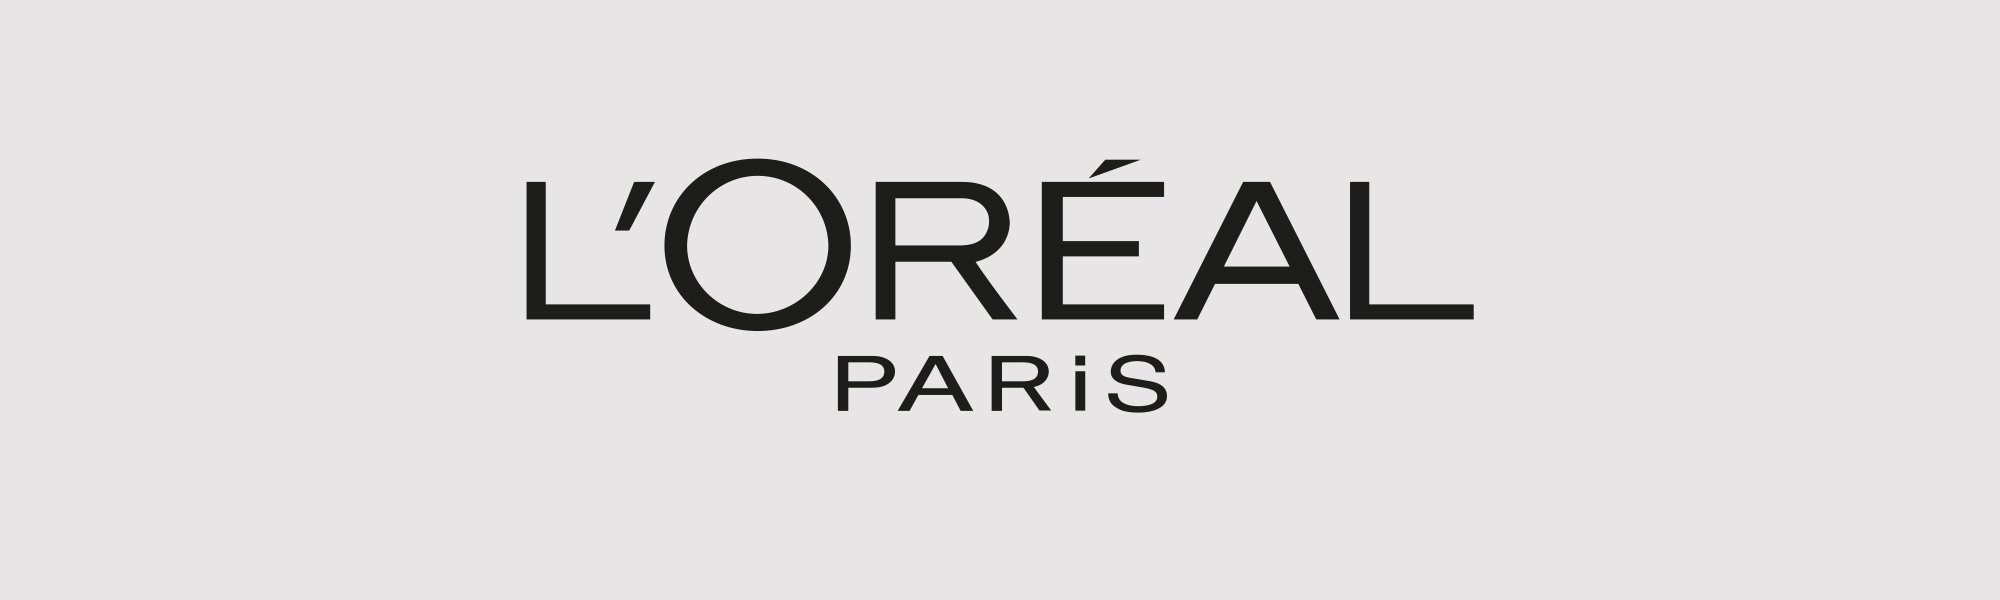 L'Oréal Paris Logo vor grauem Hintergrund